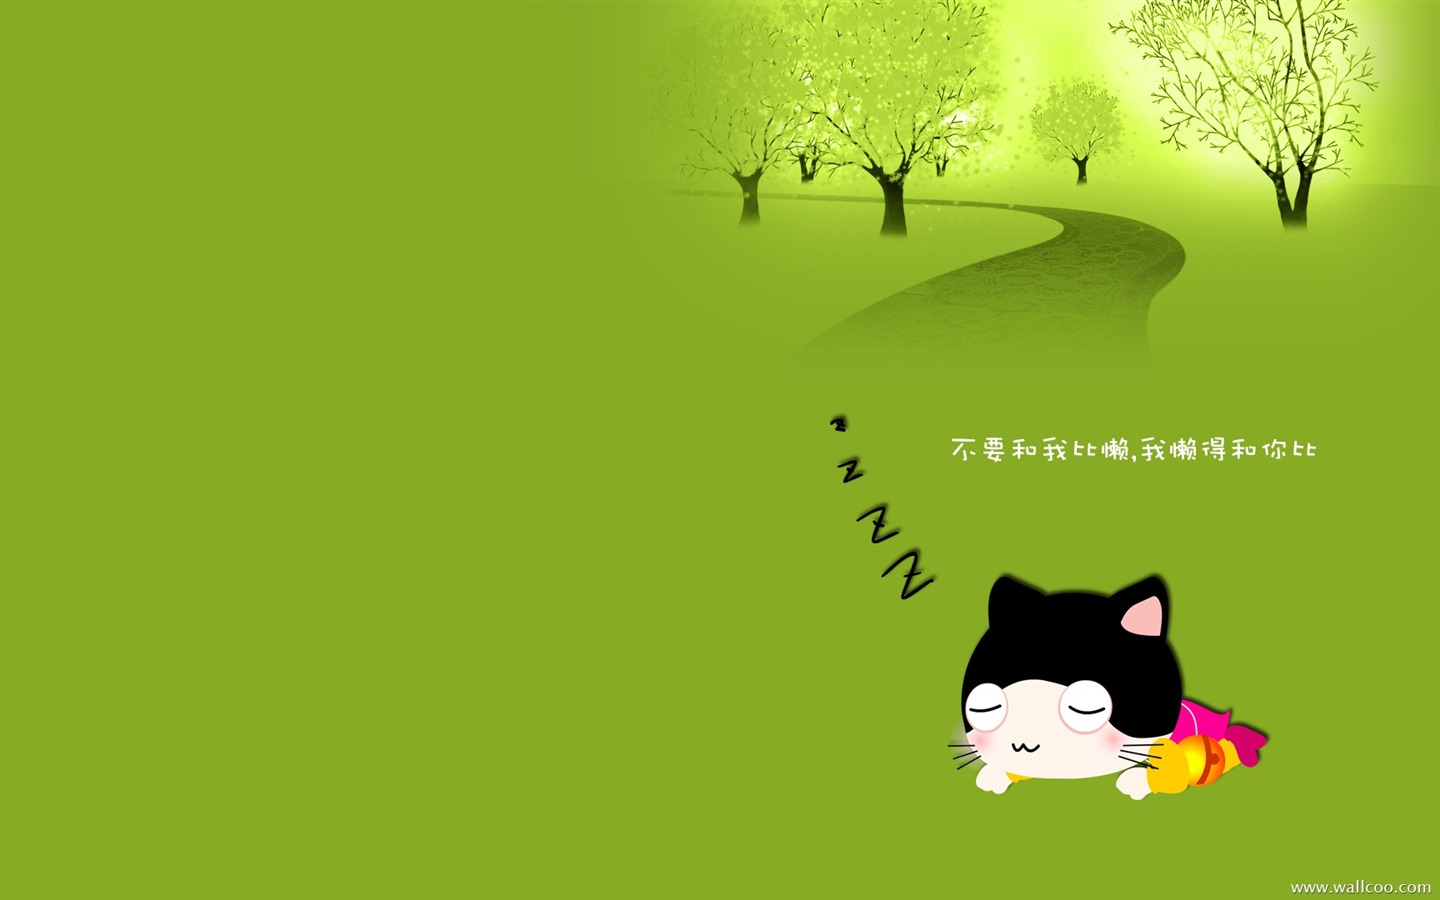 Baby cat cartoon wallpaper (4) #8 - 1440x900